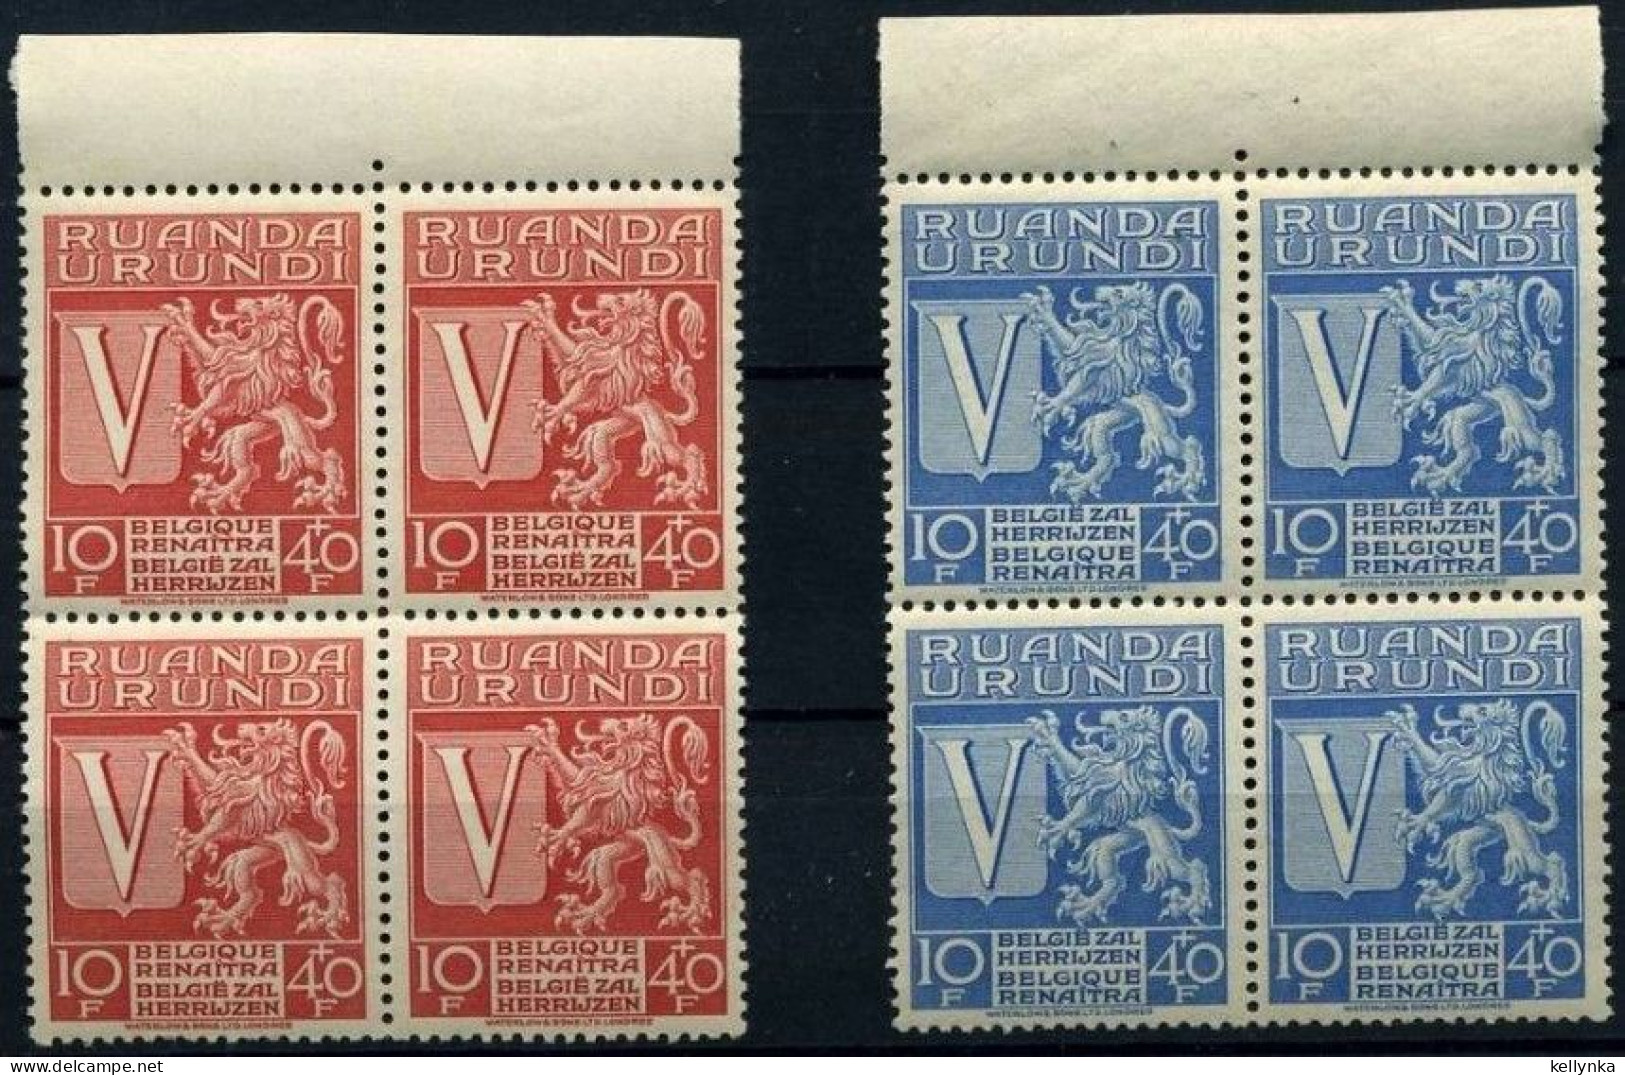 Ruanda Urundi - 148/149 - Blocs De 4 - Spitfire - 1942 - MNH - Unused Stamps